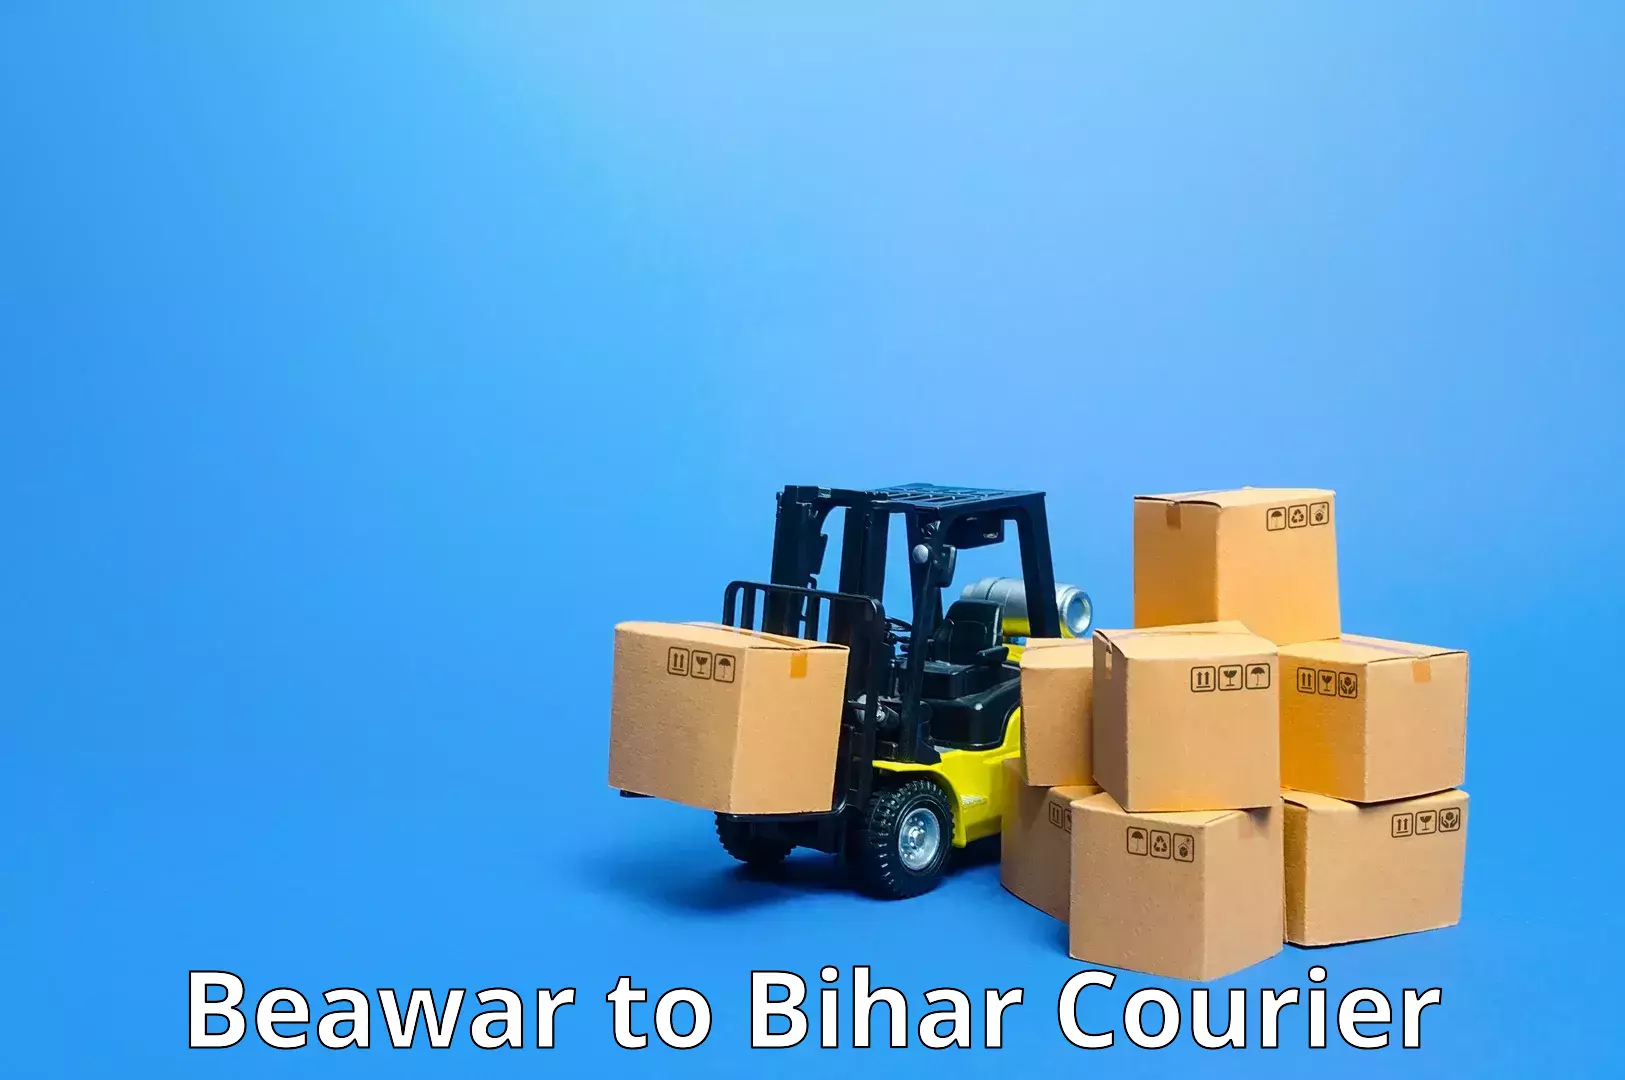 Next day courier Beawar to Dhaka